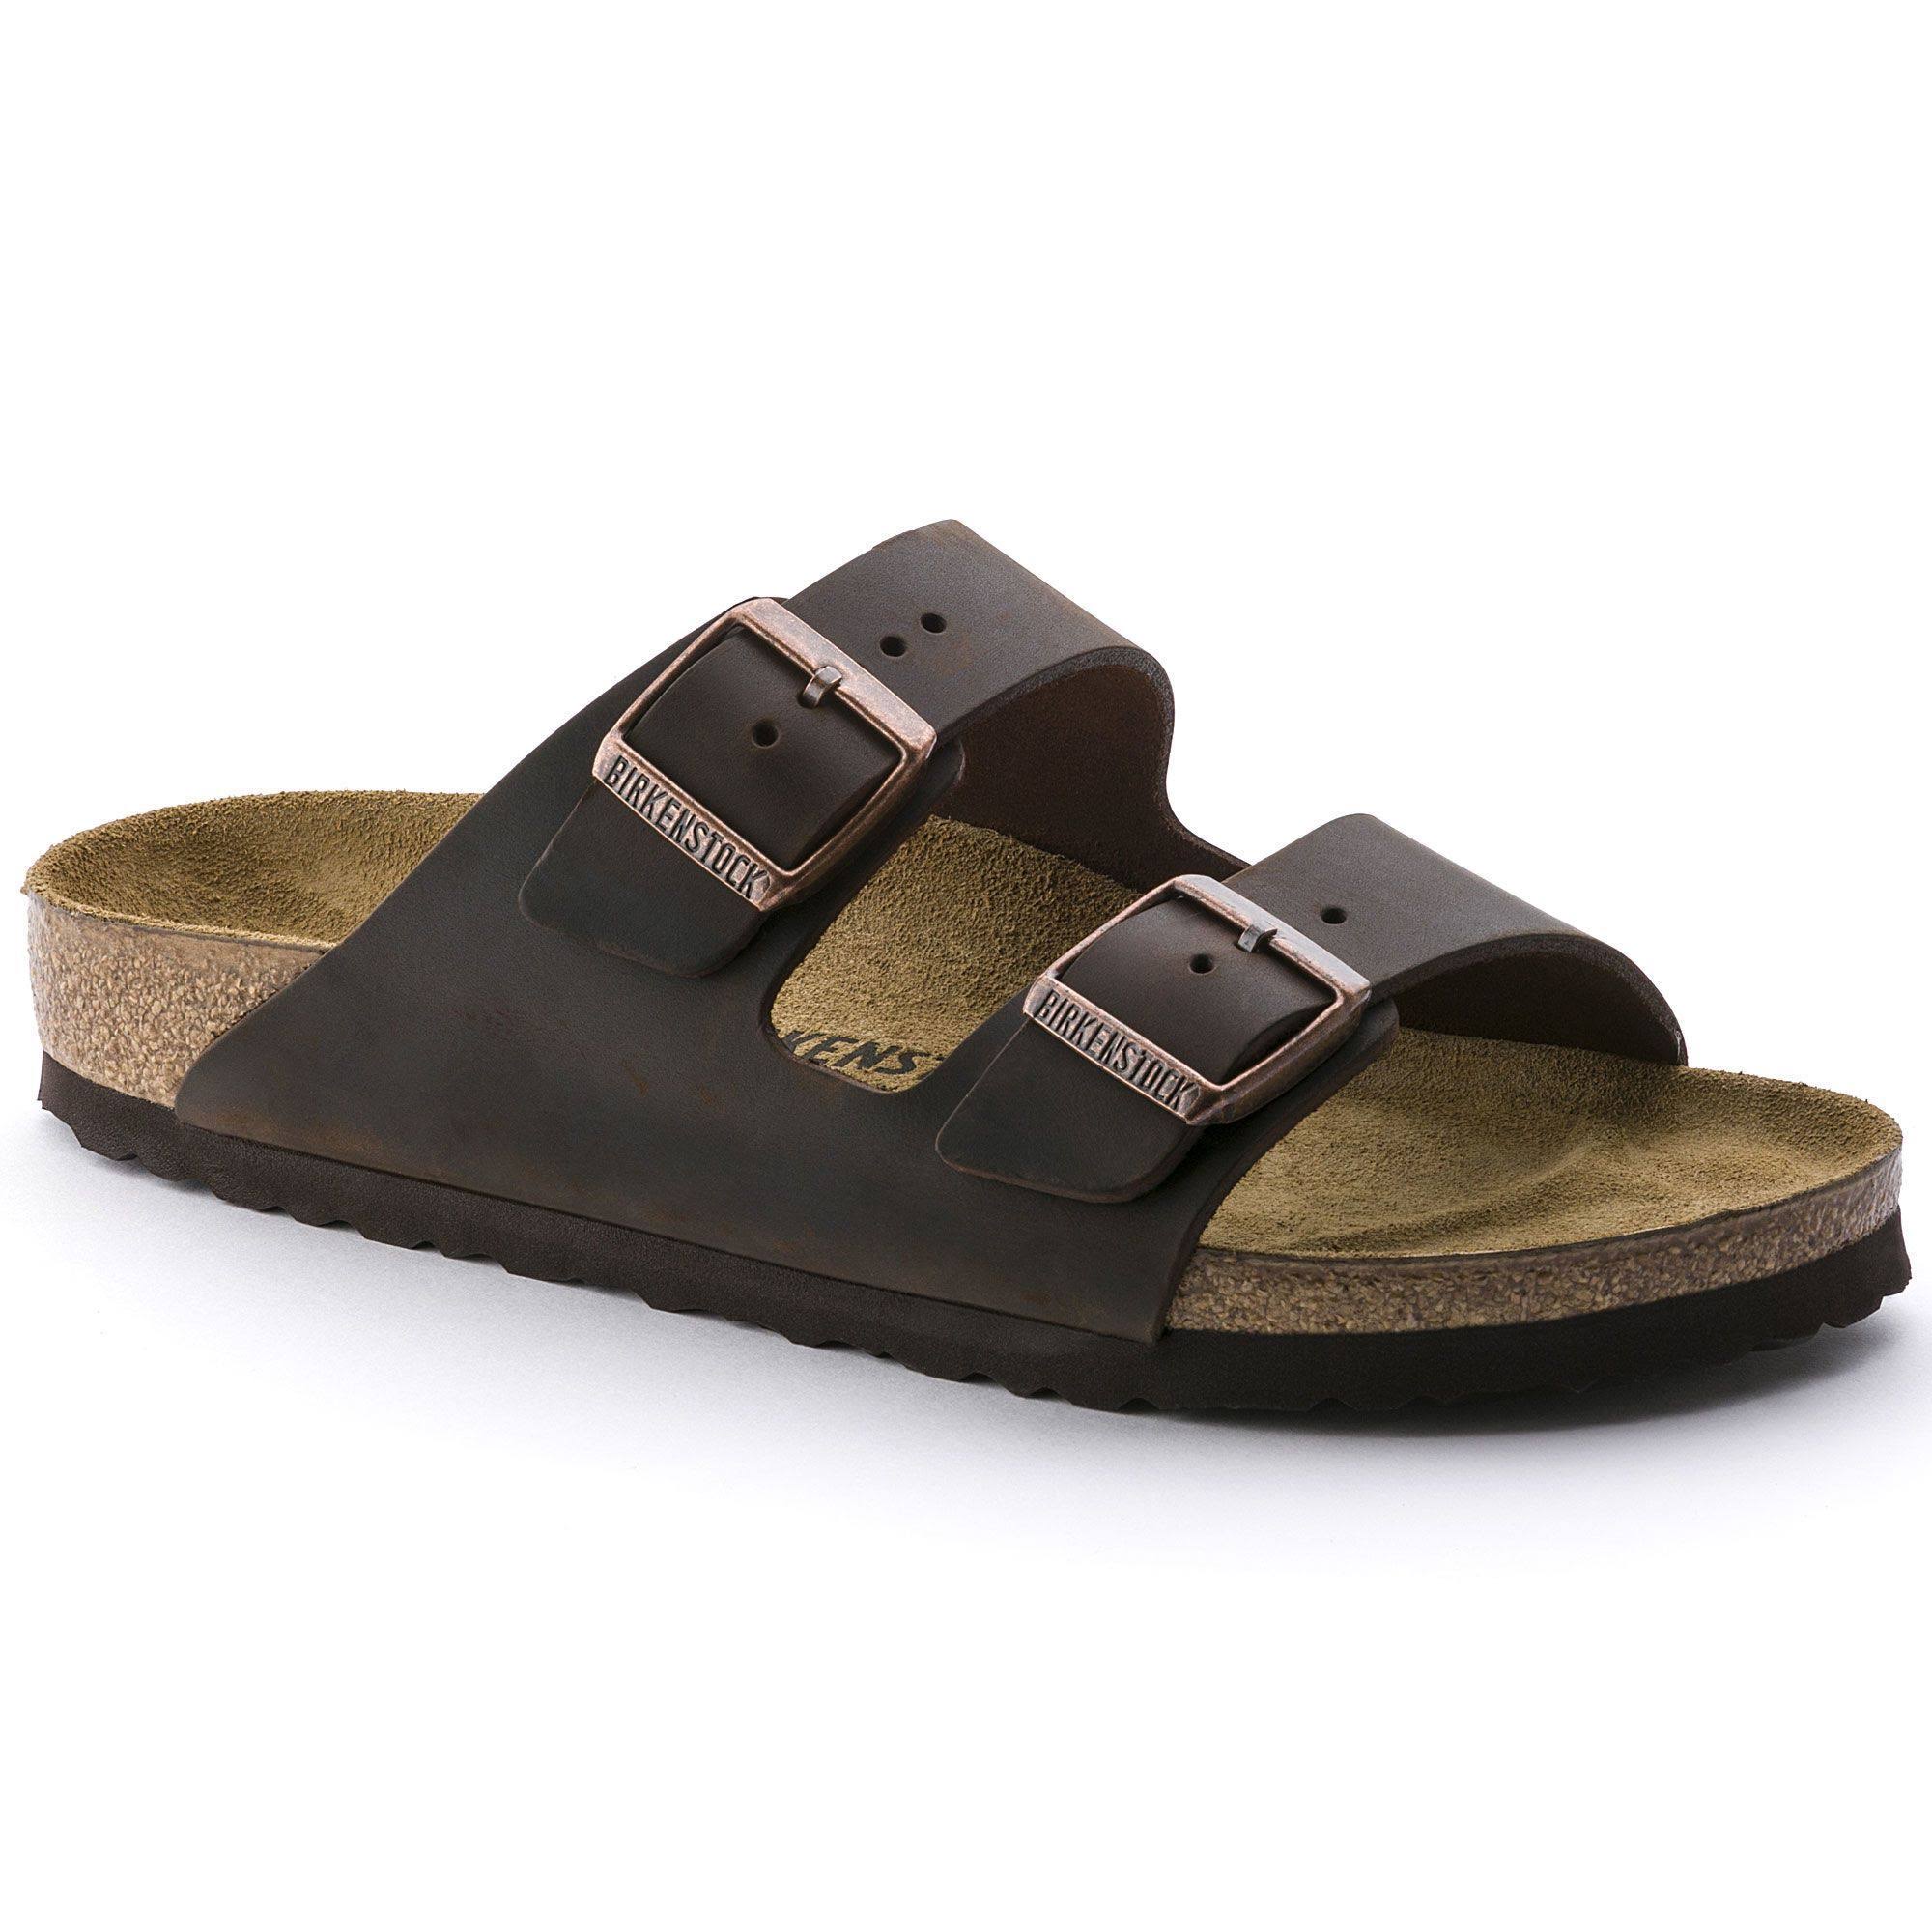 Birkenstock Unisex Arizona Slide Sandals - Habana Oiled Leather, 42 M EU, 11-11.5 B(M) US